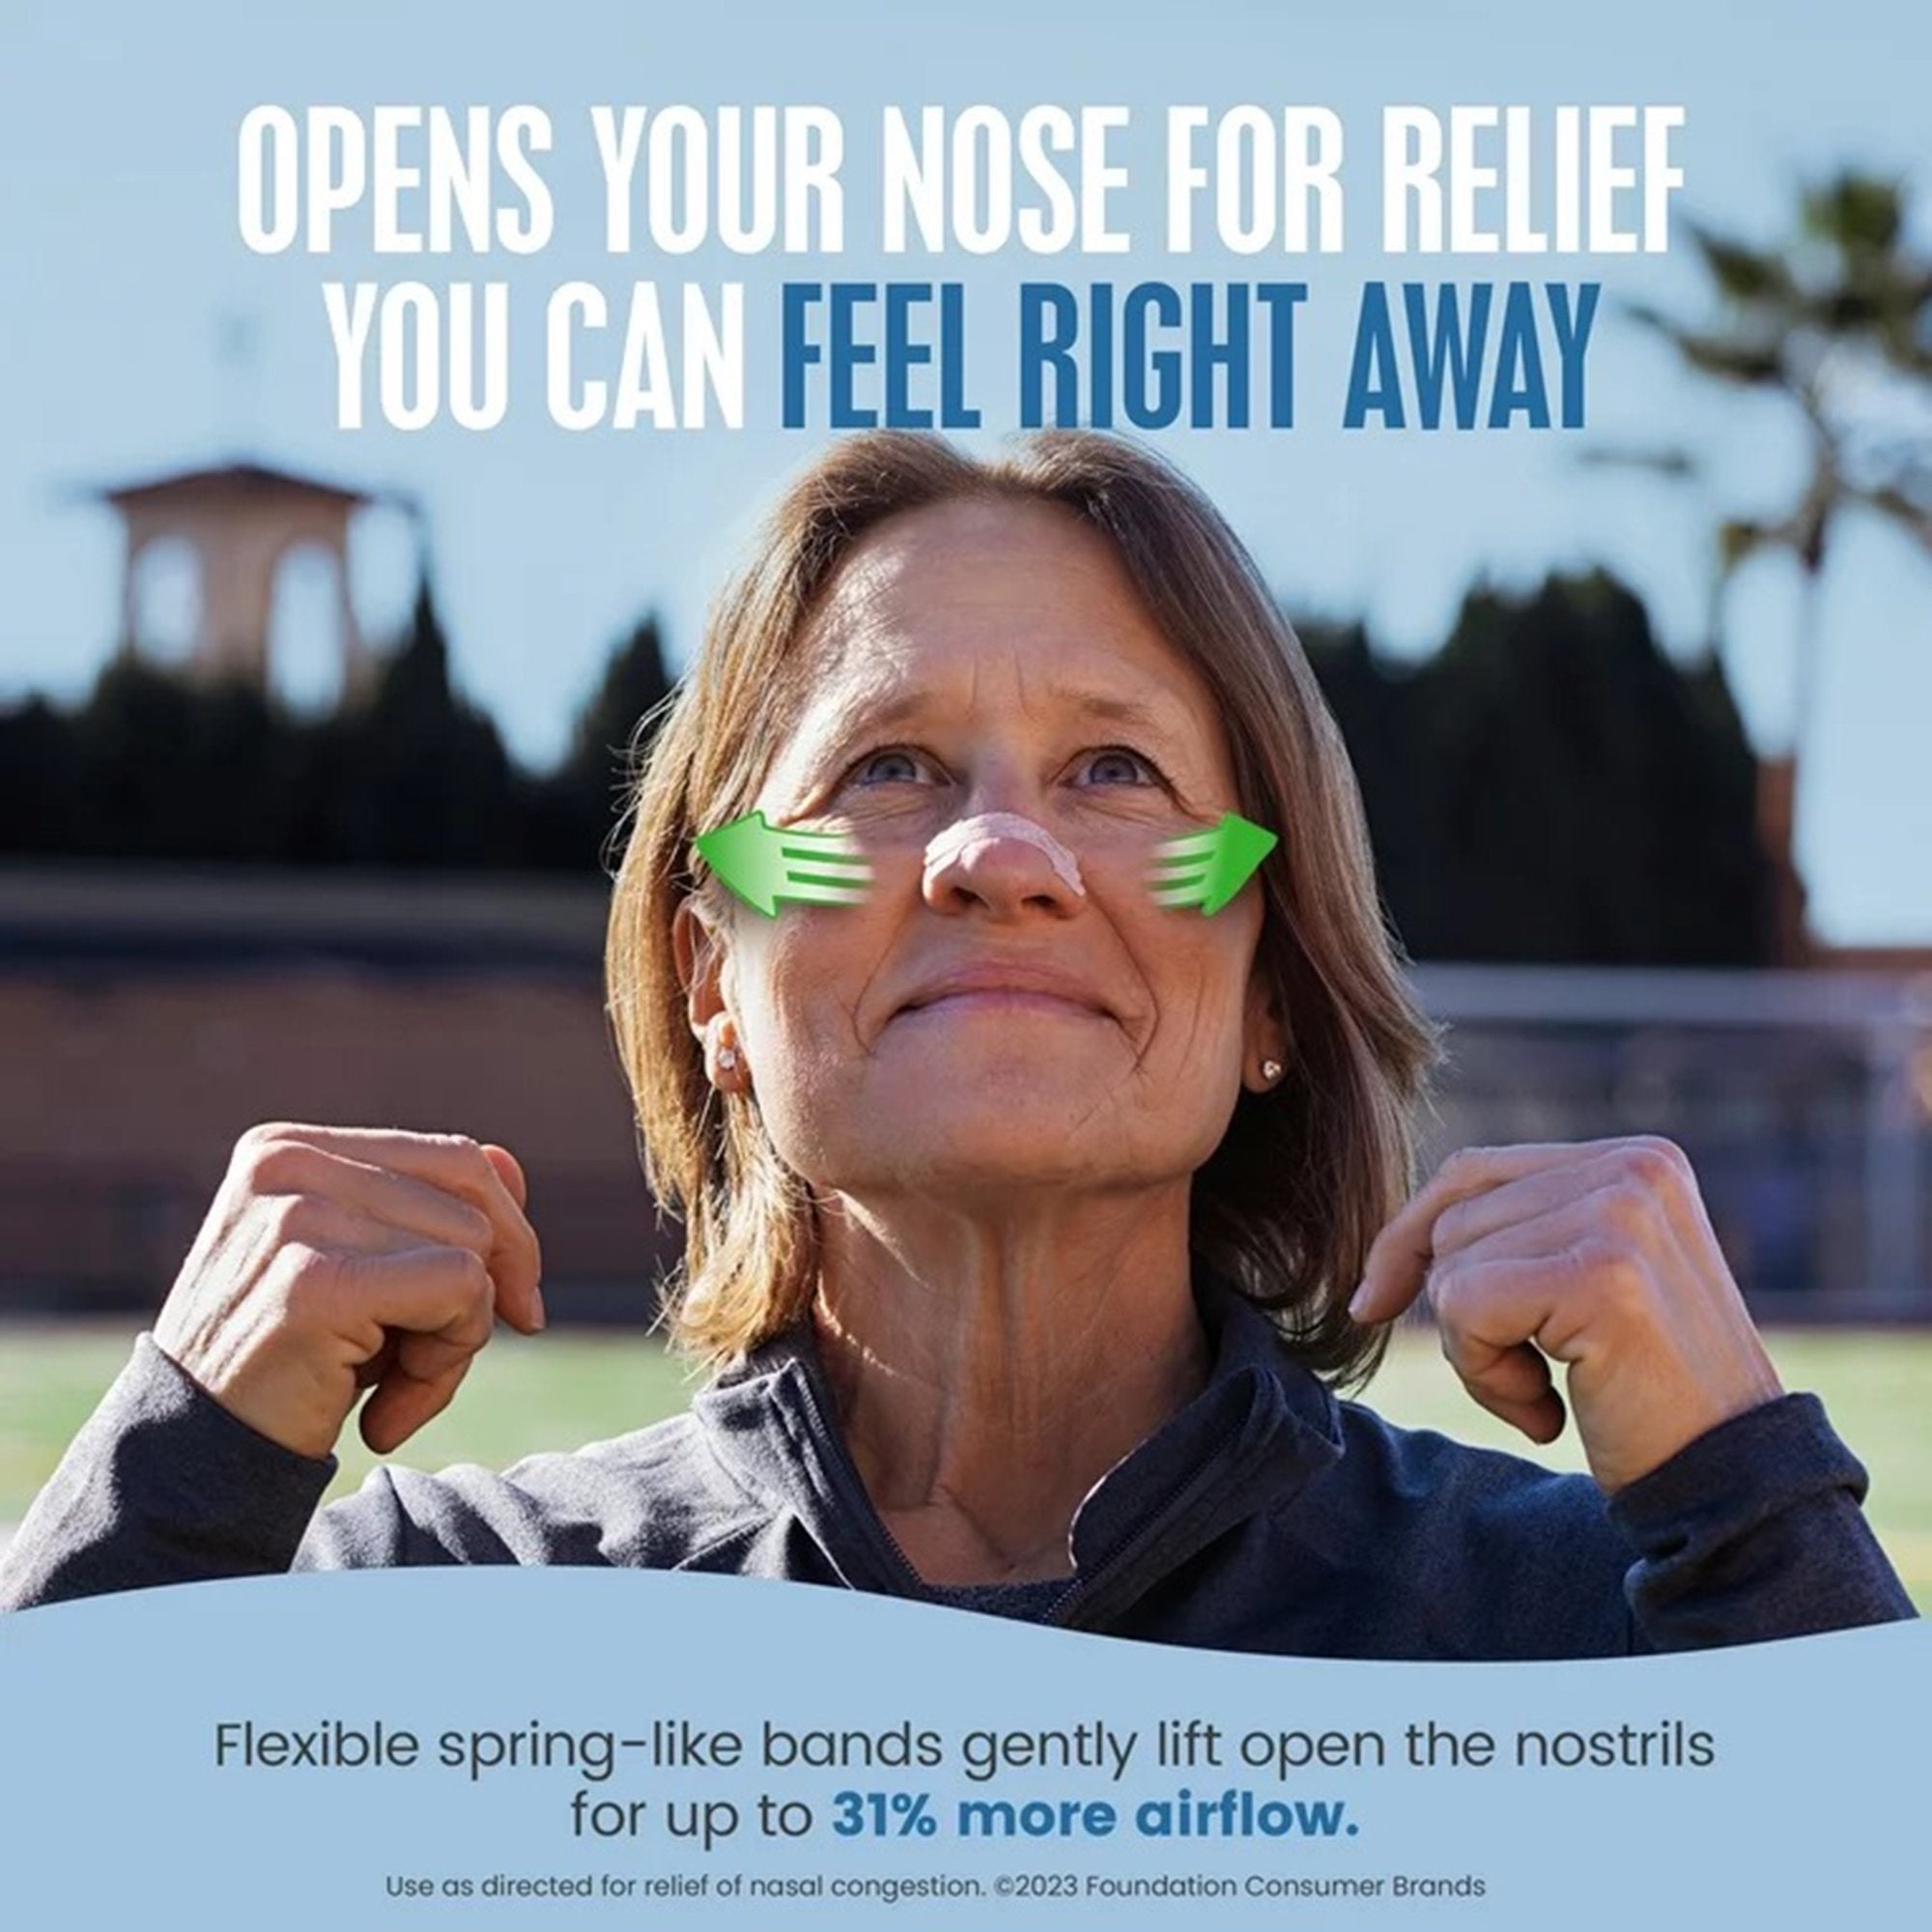 Allergy Relief Breathe Right® Extra Strength Nasal Strip 26 per Box